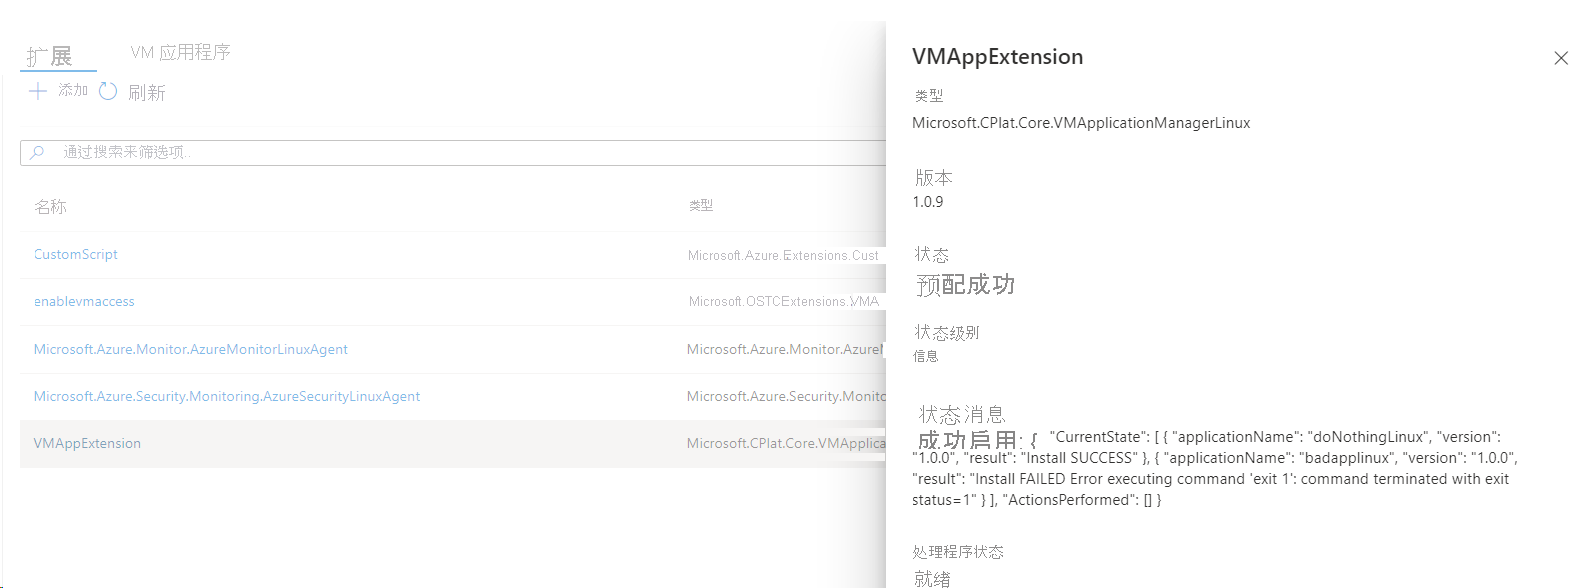 Screenshot showing VM application status.